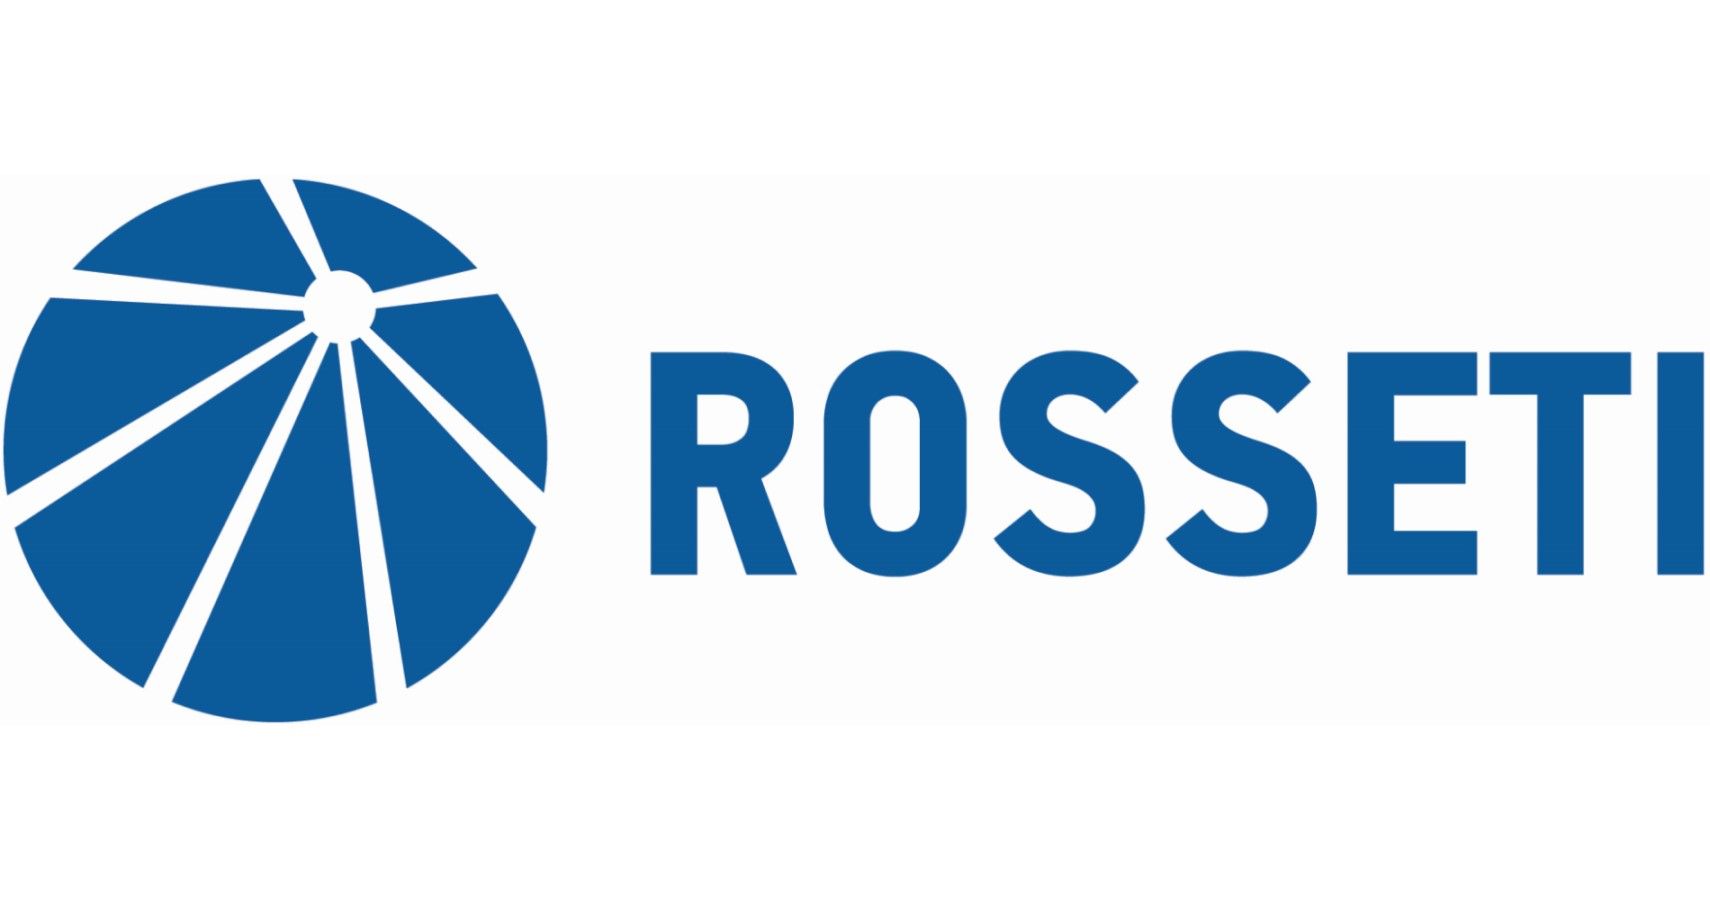 Russian energy company Rosseti's logo